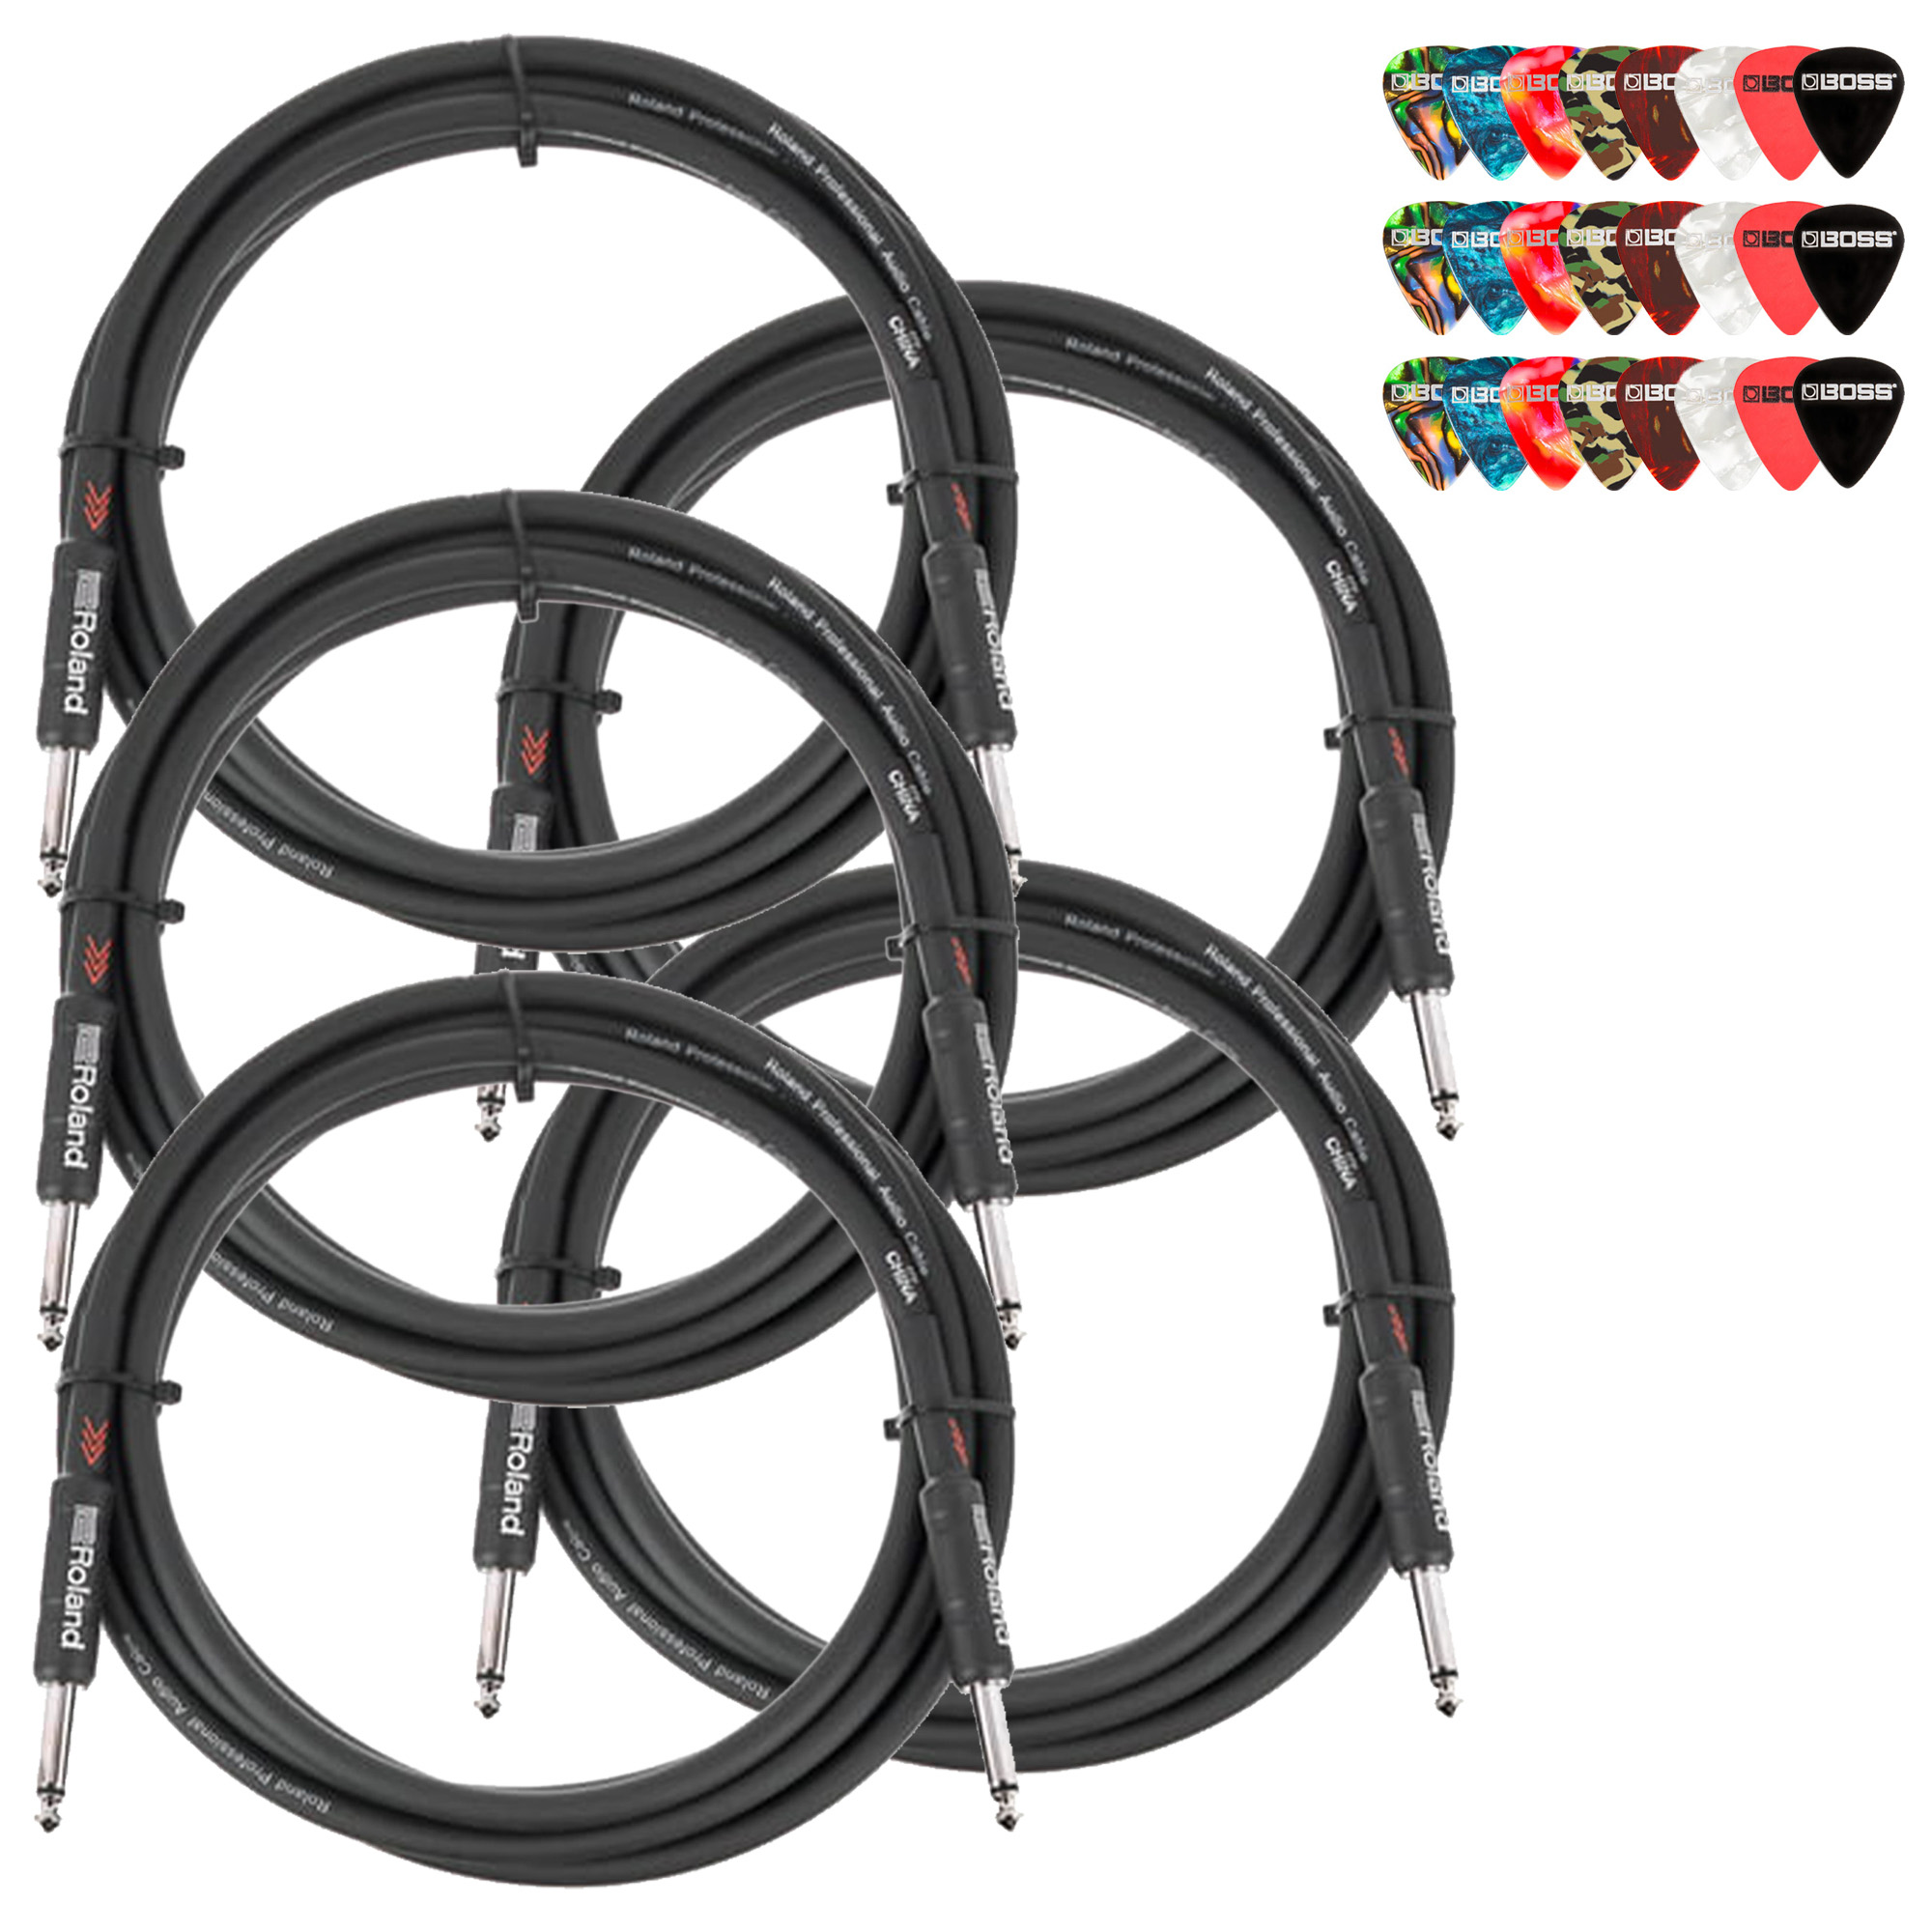 Fundament velordnet Råd Roland 20-Foot Instrument Cable, Straight, Black Series - 5 Pack w/ Picks  840262211352 | eBay